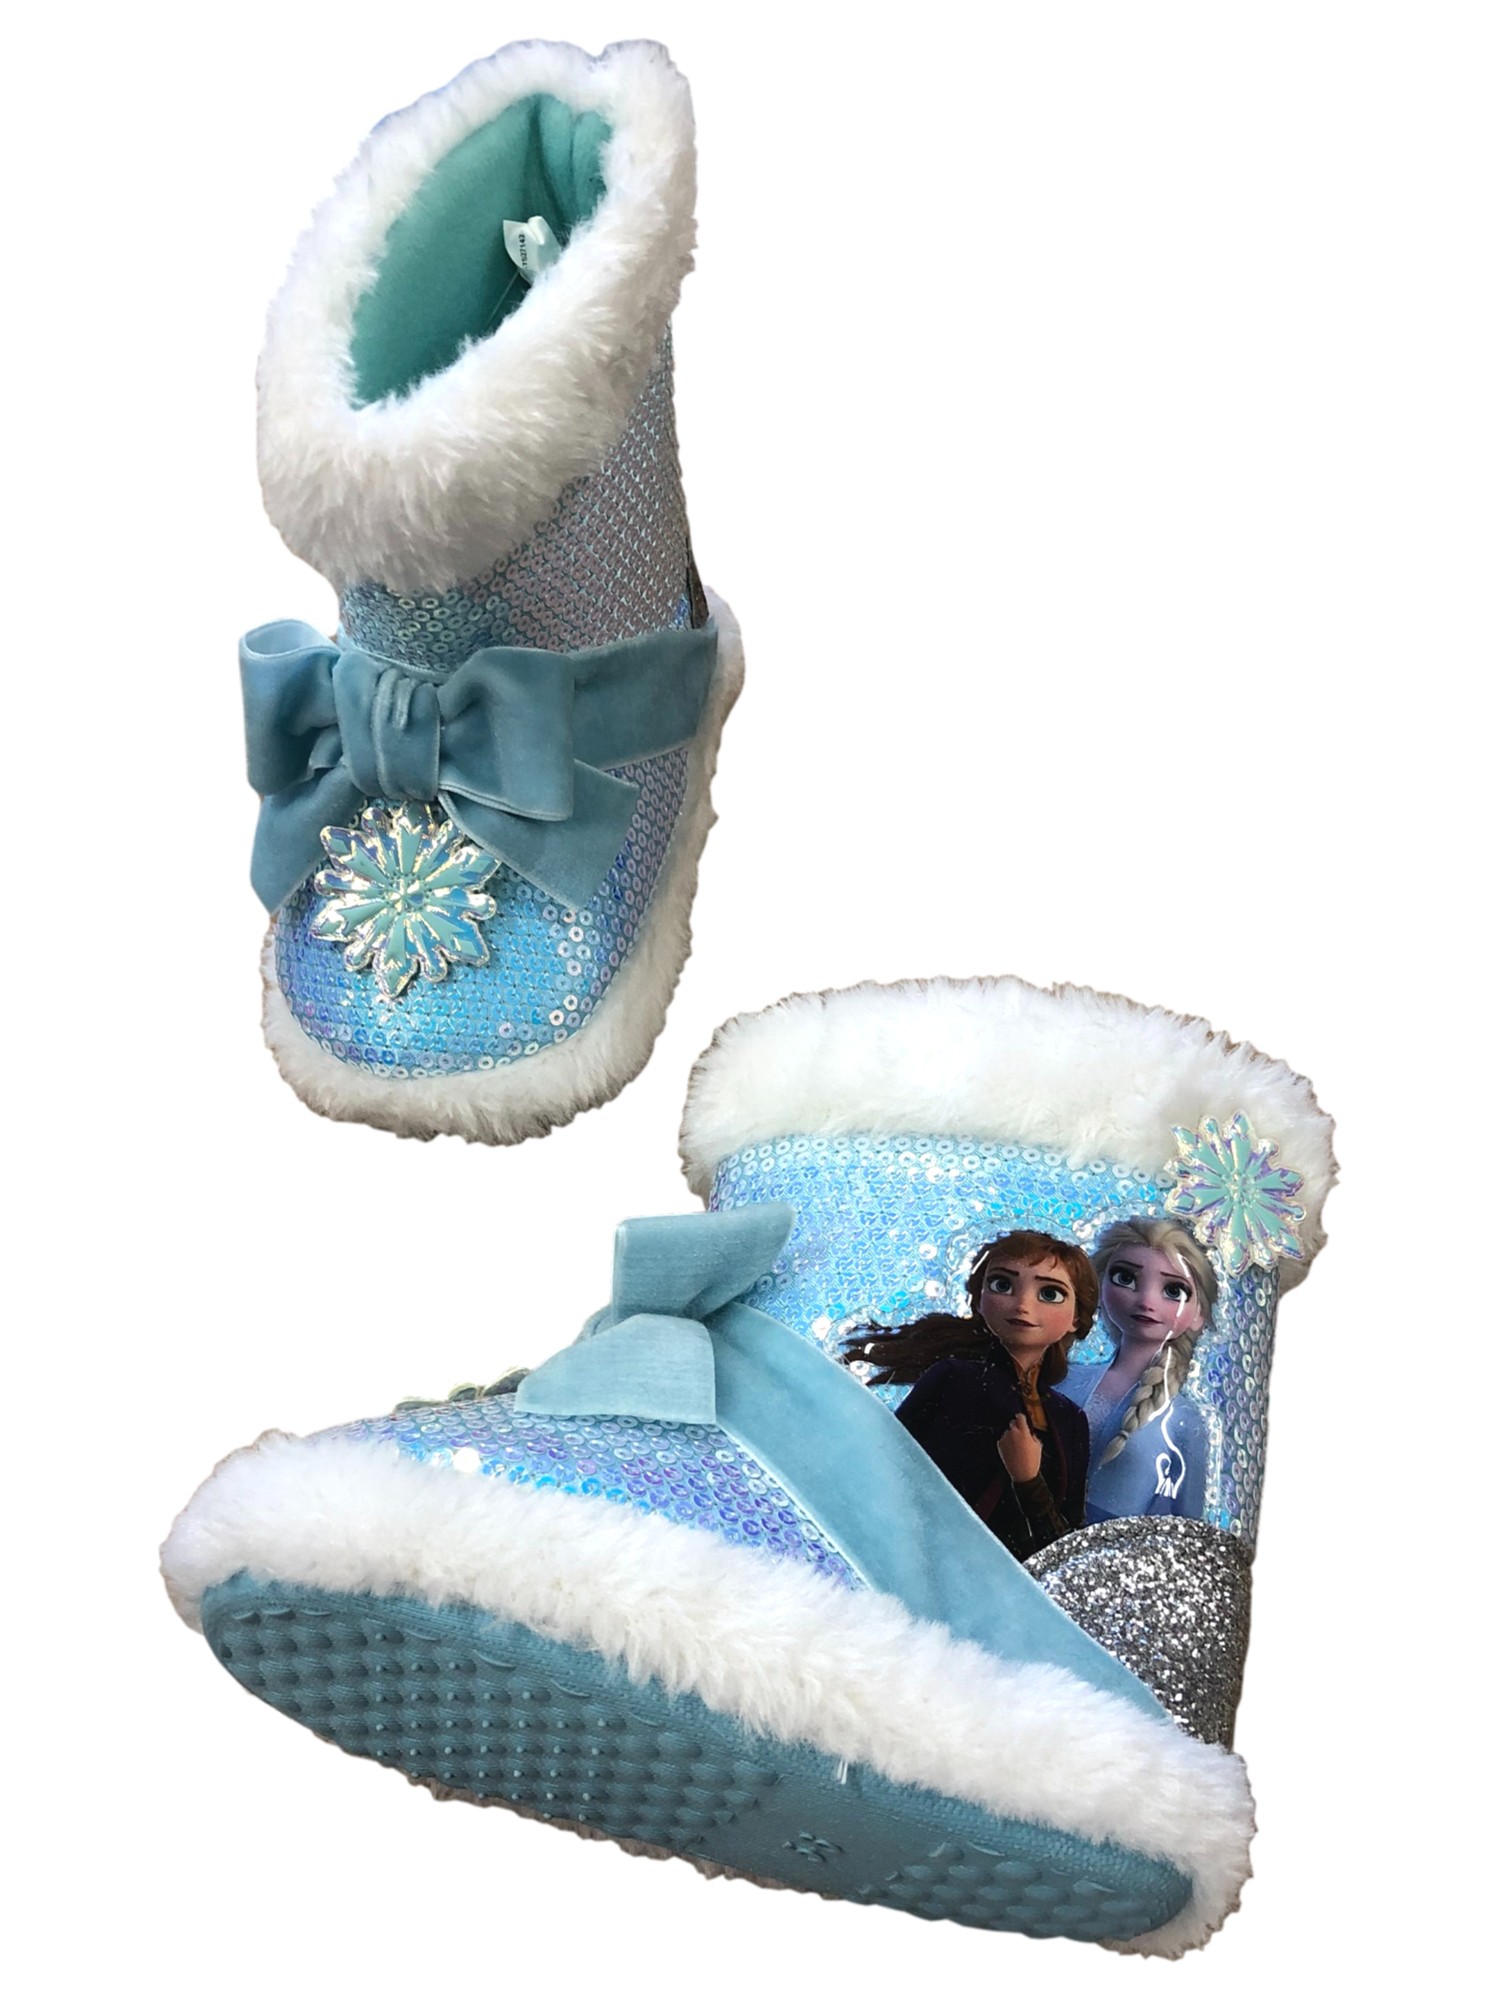 Disney Frozen Toddler Girls Blue Sequin Plush Slipper Boots House Shoes Size 7//8